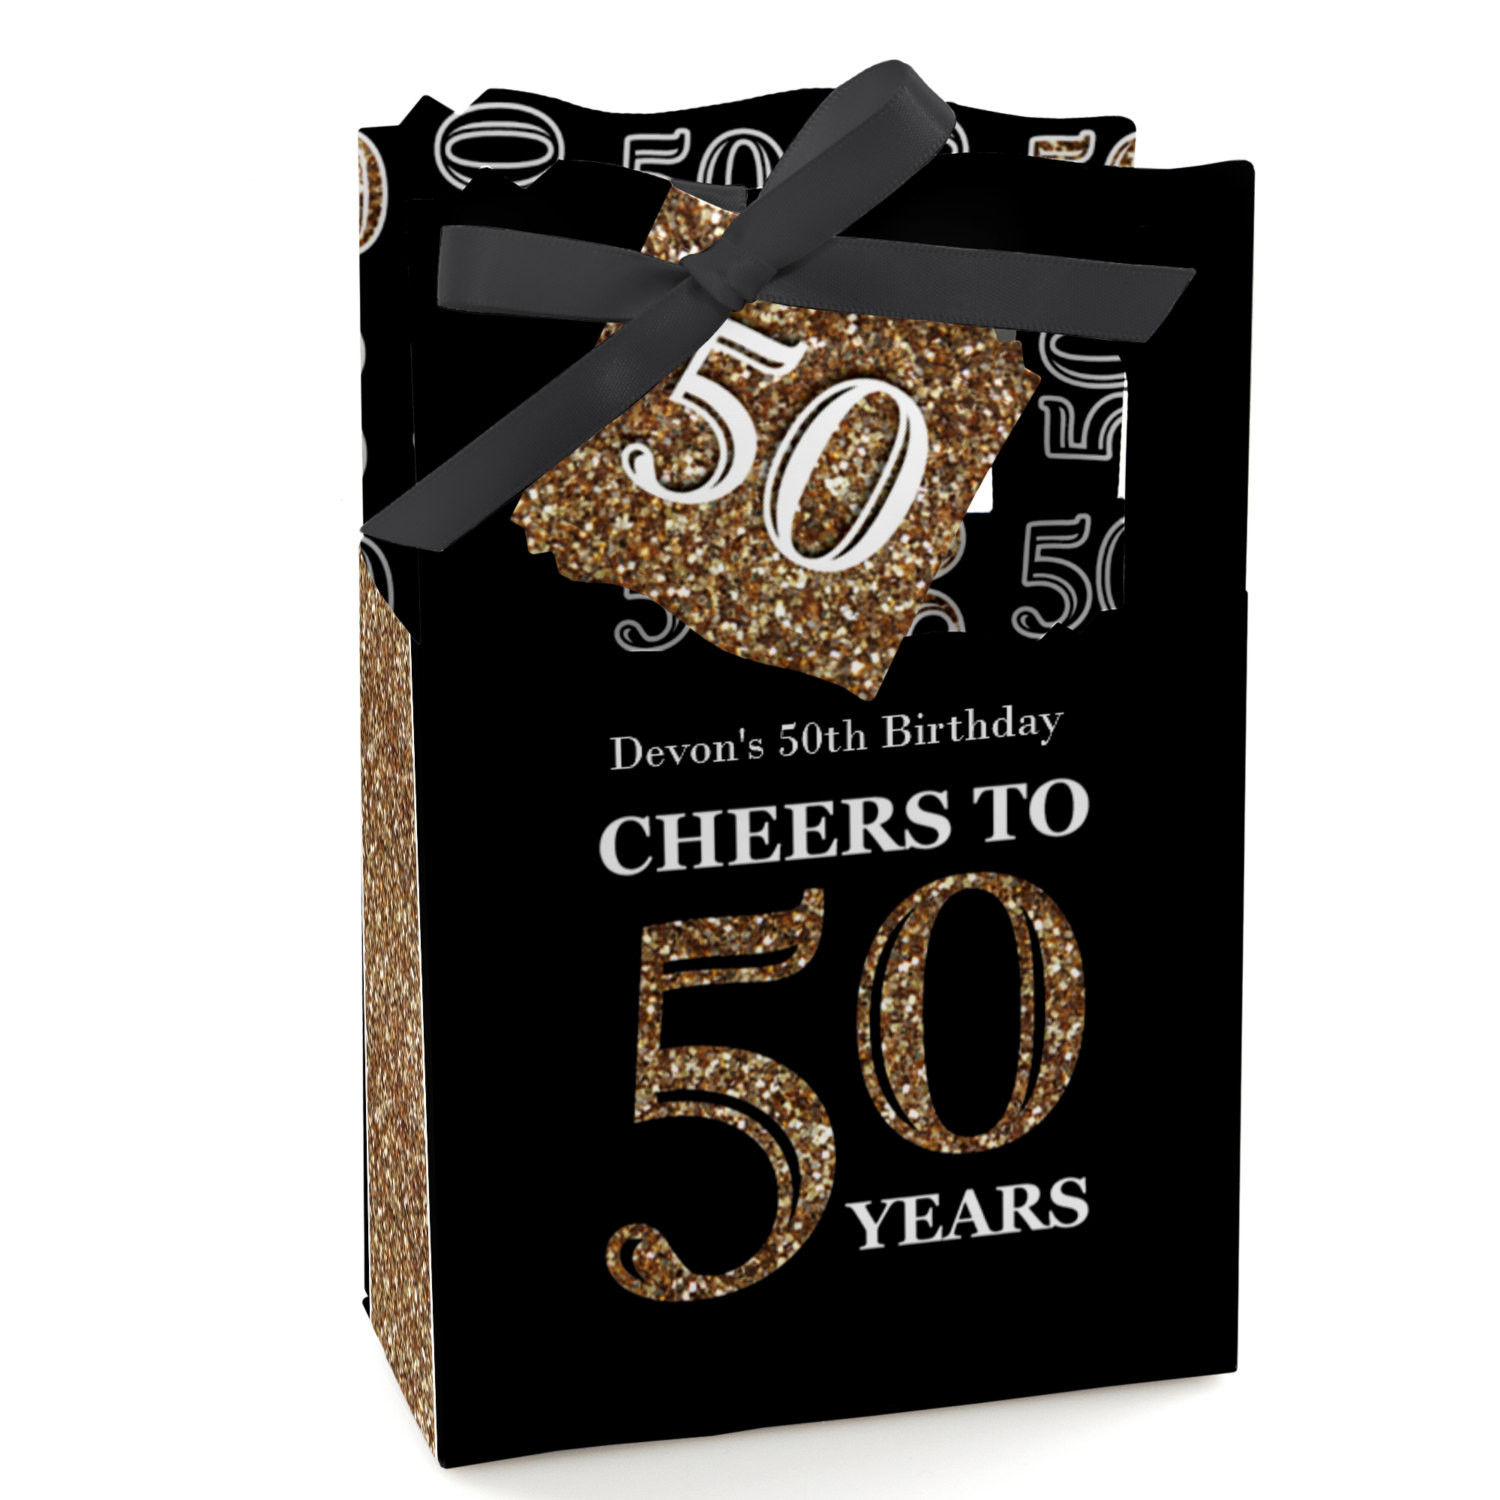 50Th Birthday Party Favor Ideas
 50th Birthday Party Favors for Birthday Parties Favor Boxes